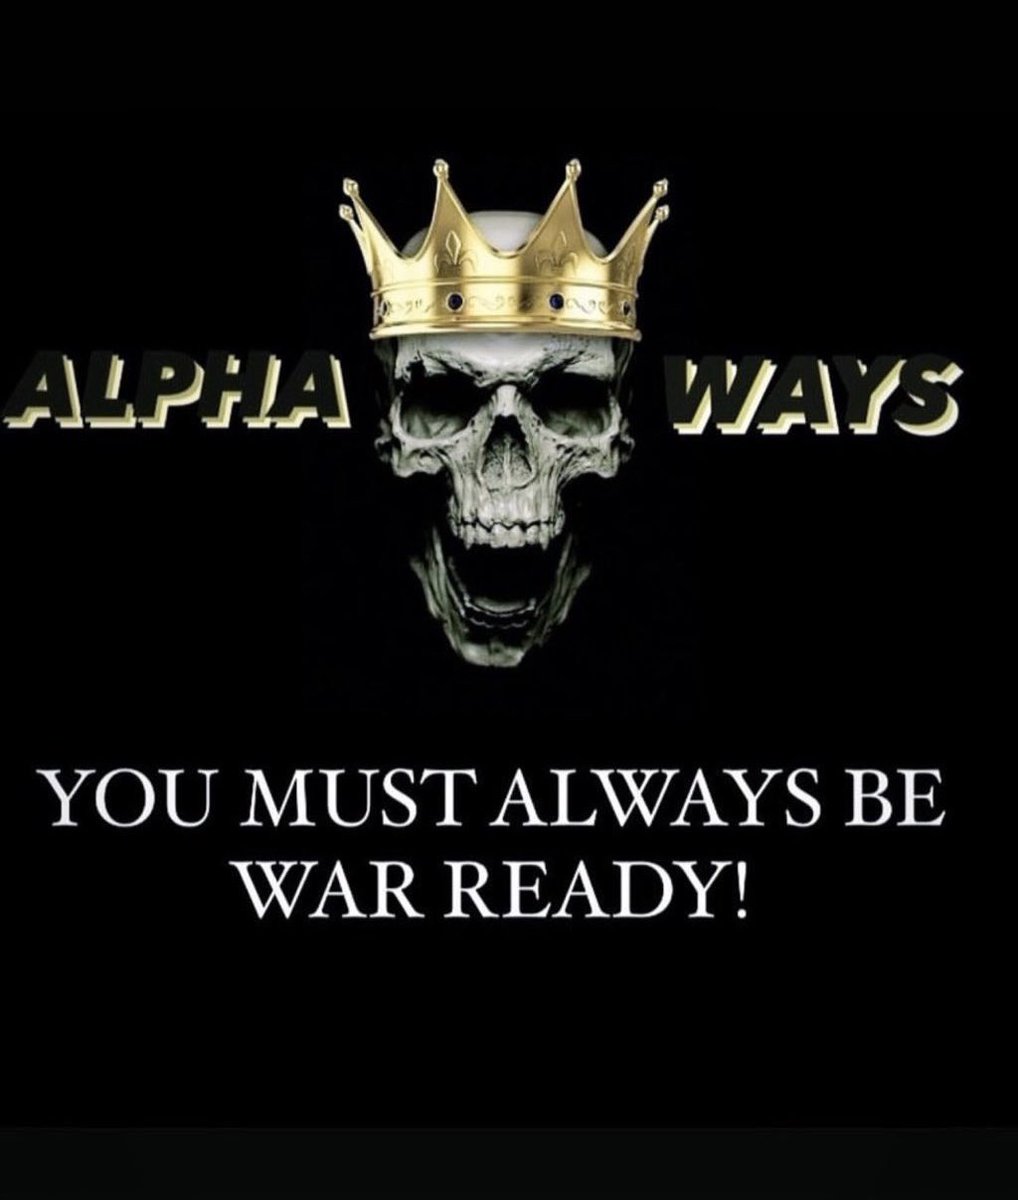 ALWAYS #War READY! 🥊🥋🔫⚔️🛡🗡 #TeamBolte #savagelife #boss #king #alpha #highvalueman #warready #masculinity #levelup #alphaways